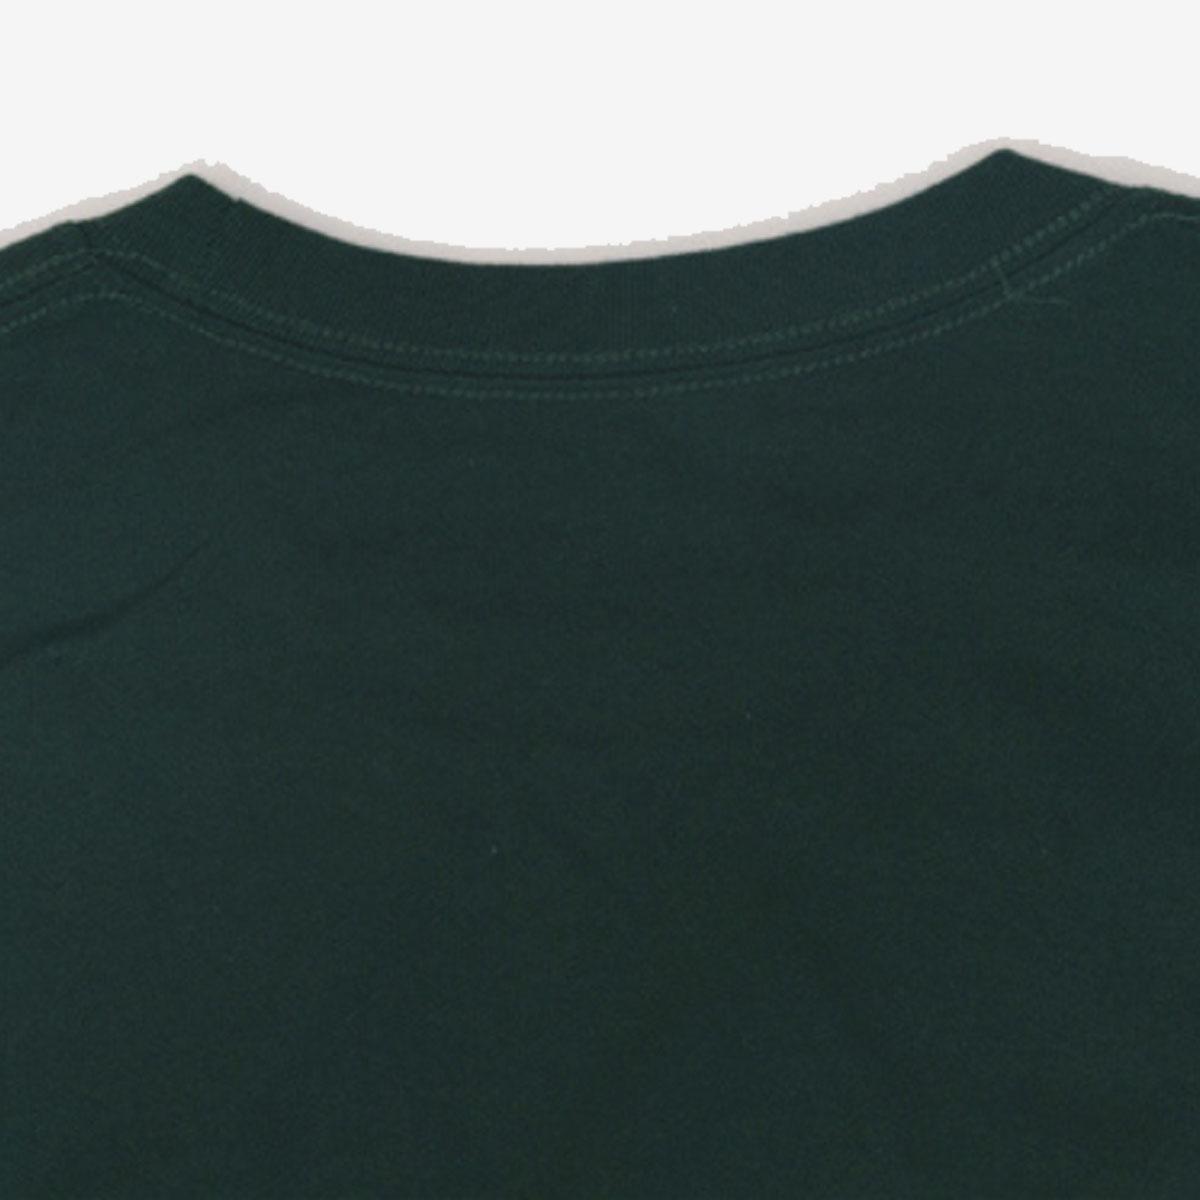 T425 素色T-shirt（墨綠色）